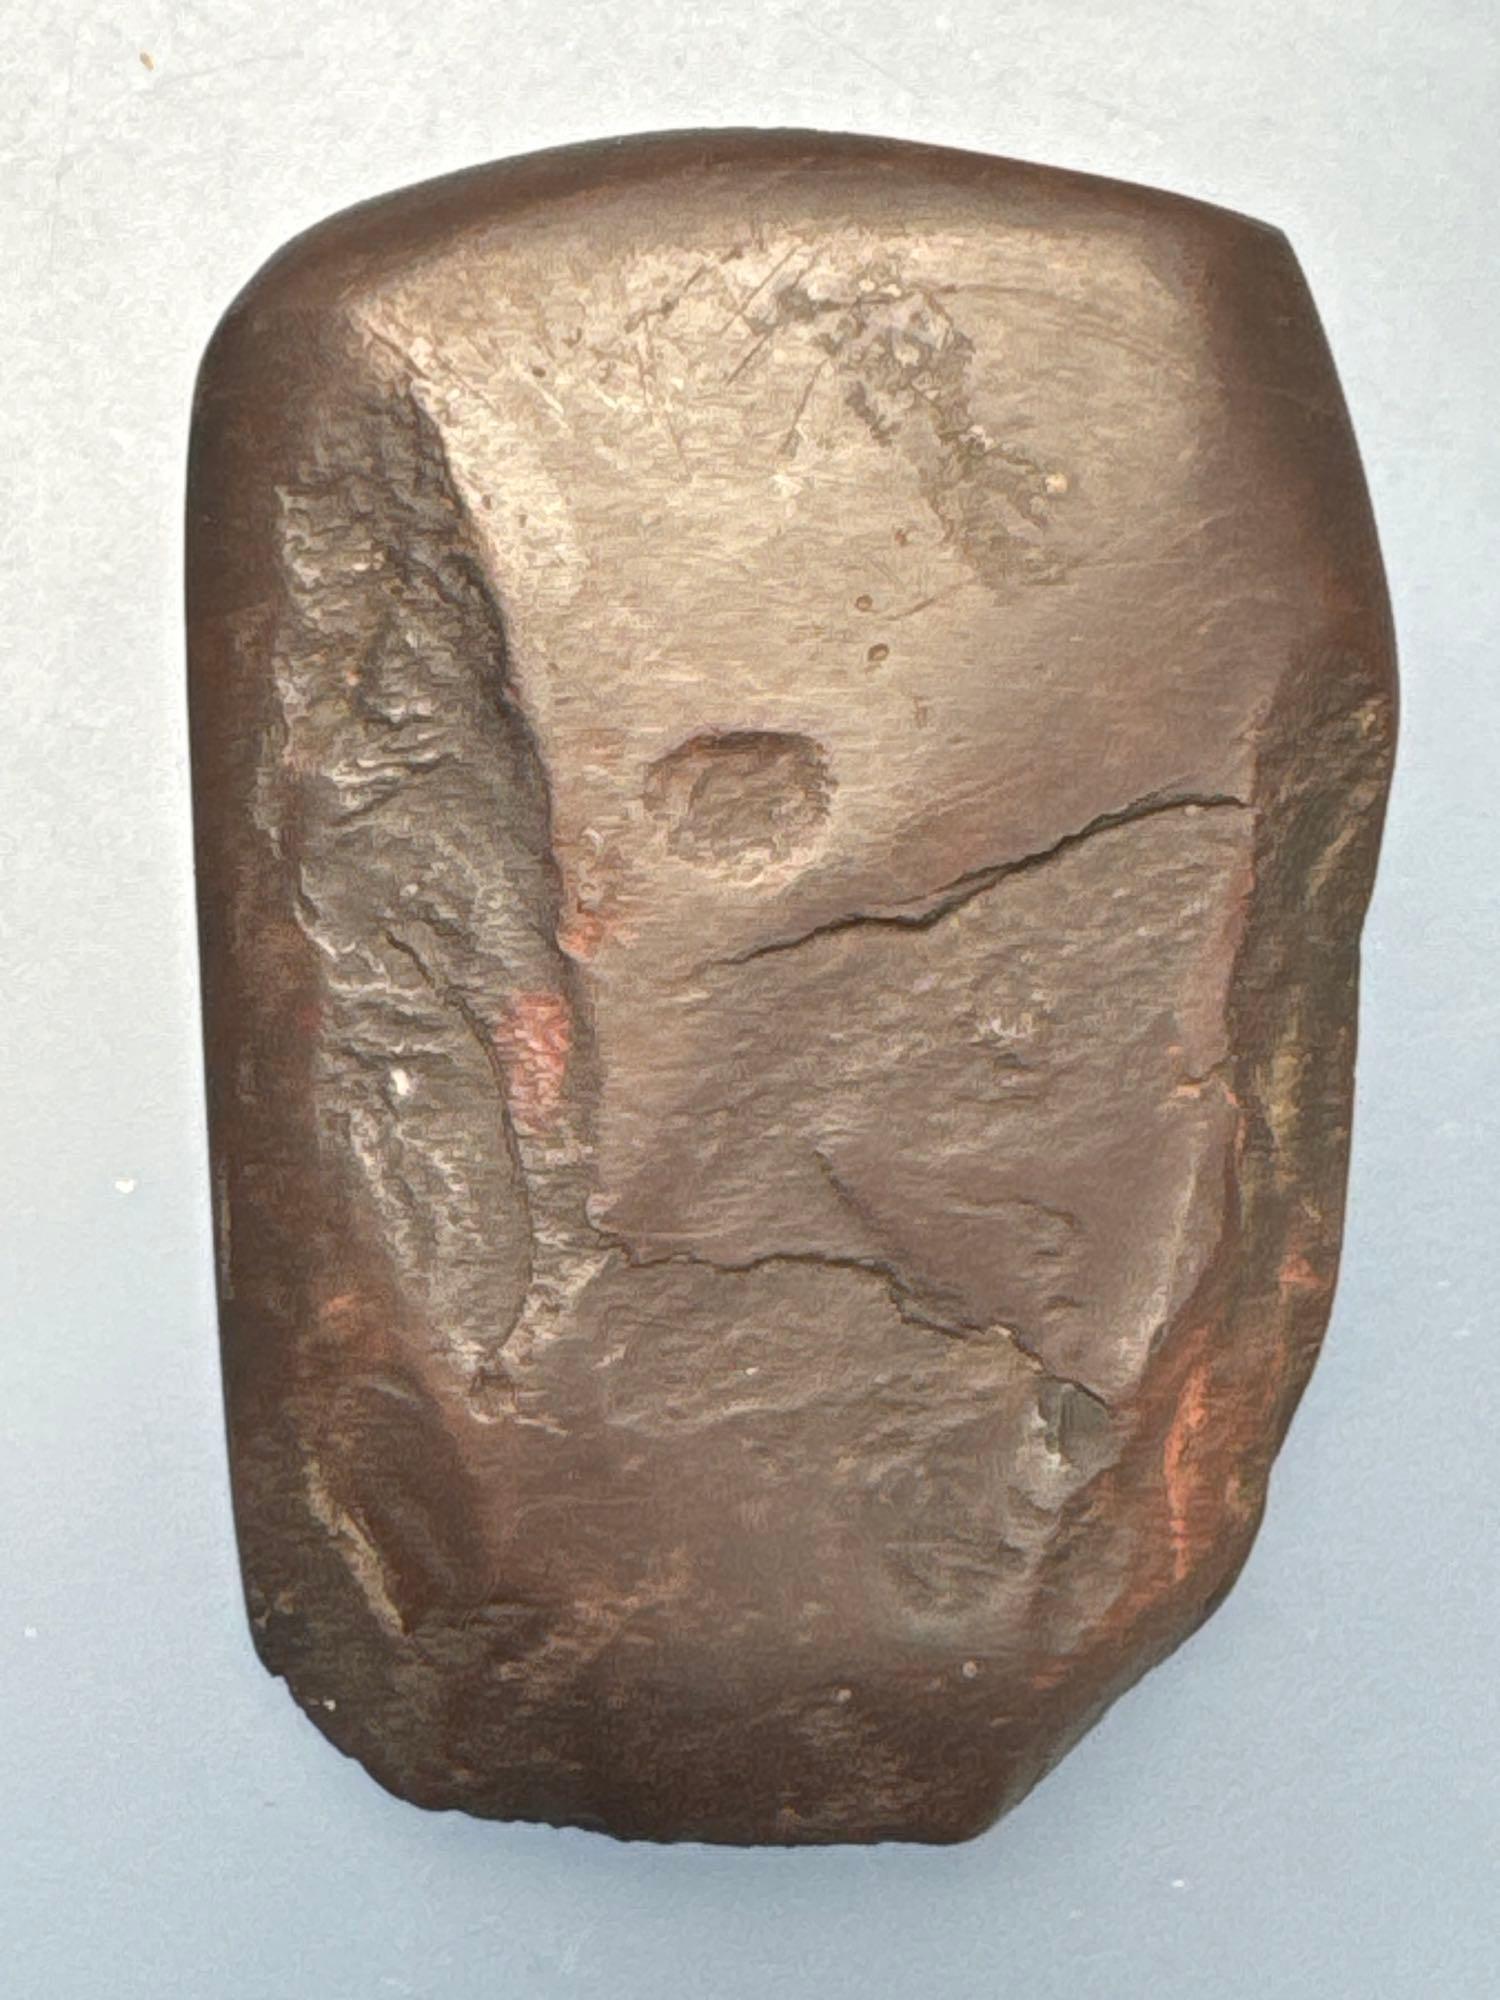 SUPERB 2 5/8" Hematite Celt, HEAVY for Size, Found in Ohio, Ex: Cicero Collection